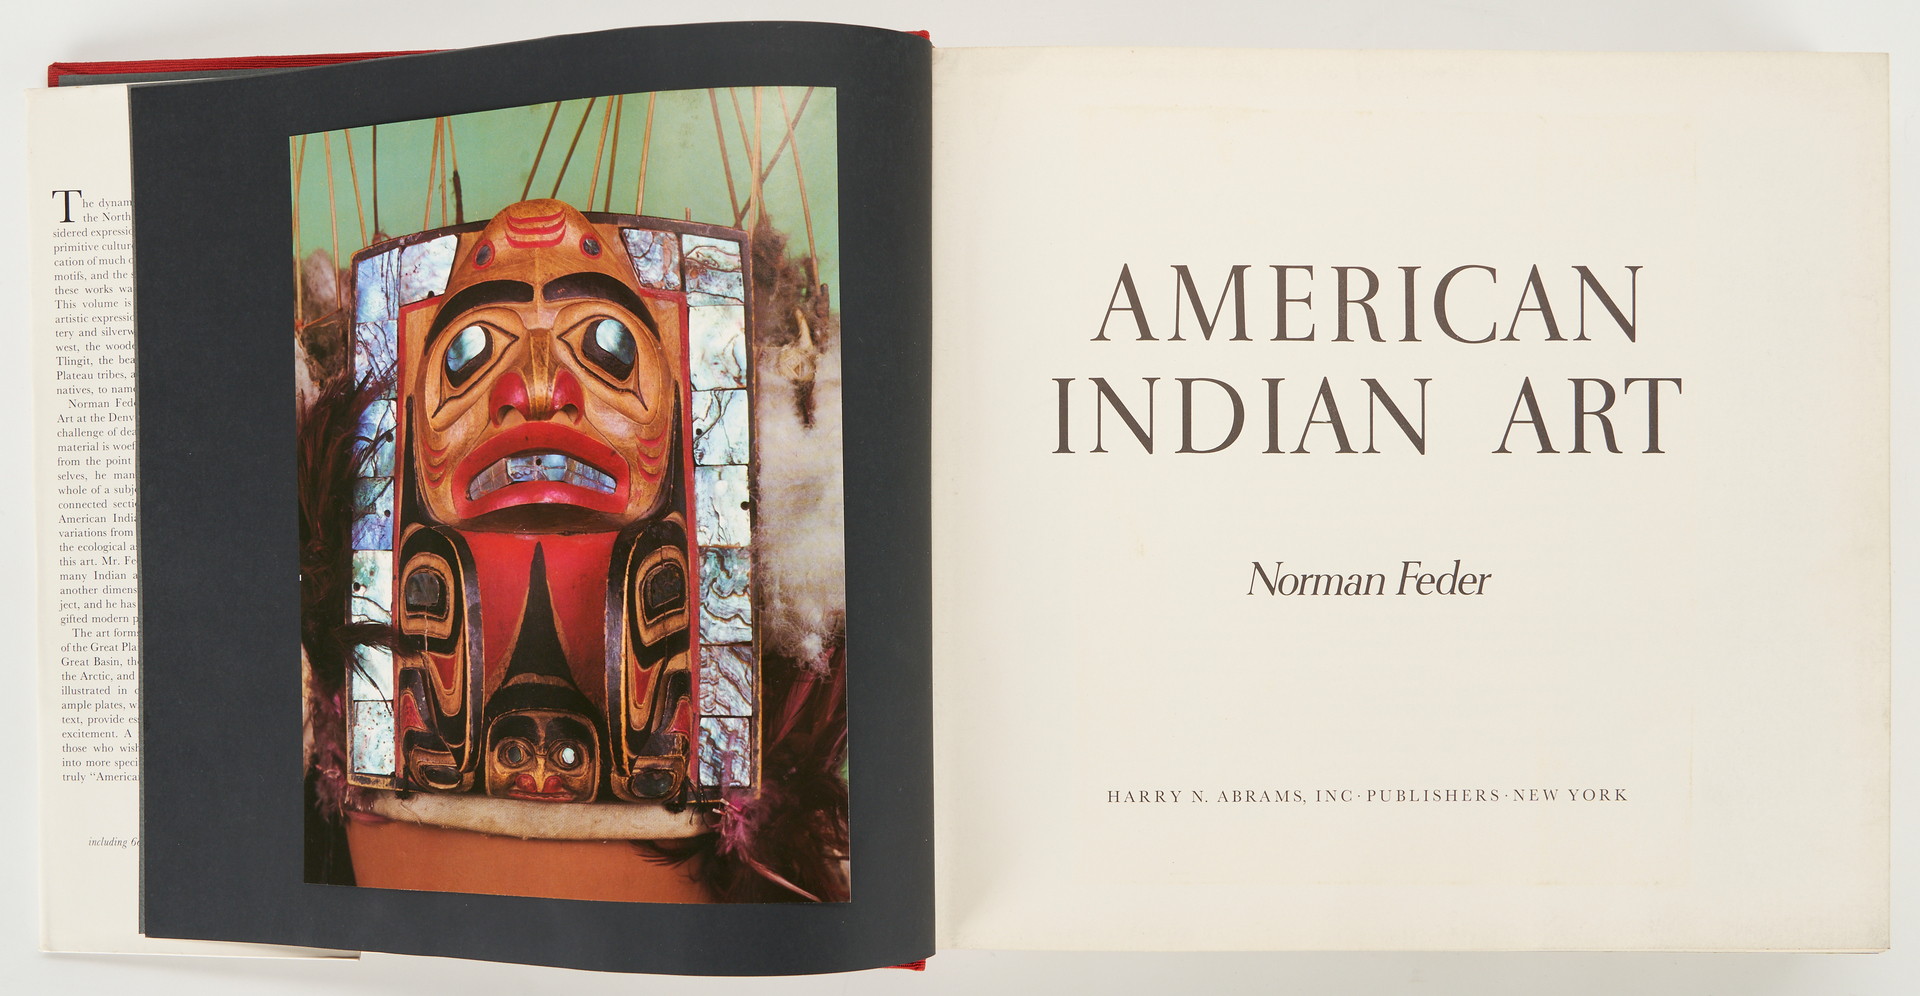 Lot 486: Ken Kidder, Native American Kwakiutl Tribal Mask plus Book